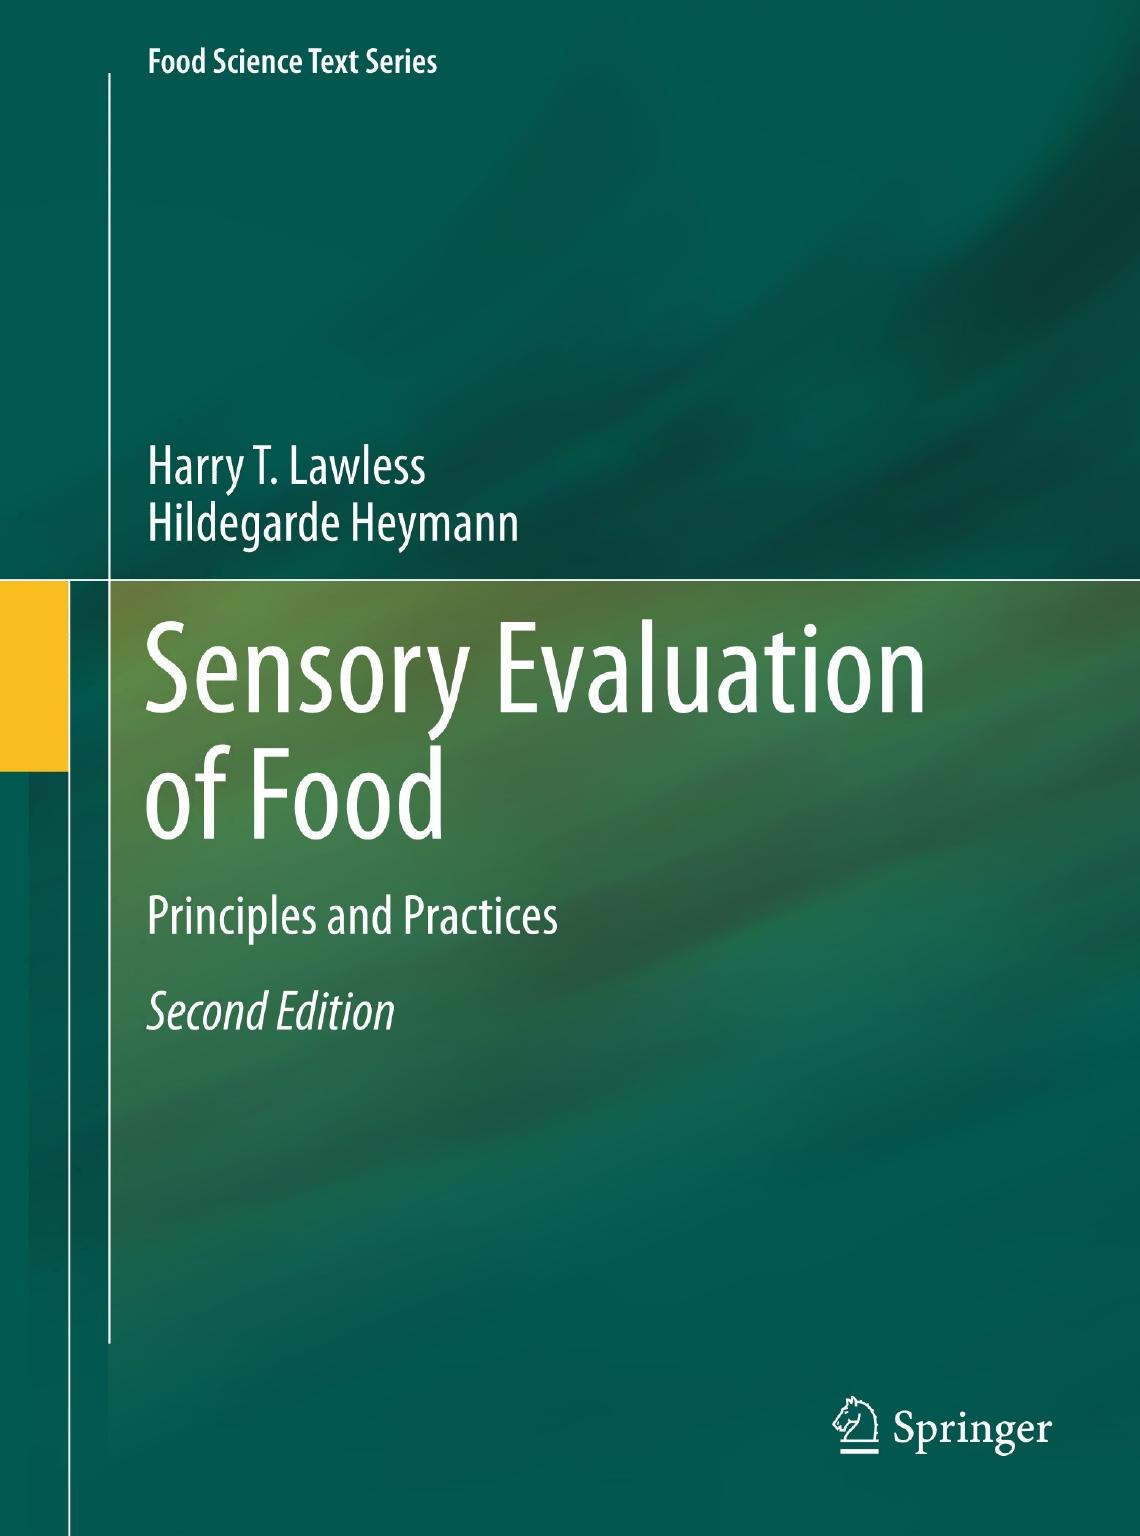 Sensory Evaluation of Food by Harry T. Lawless & Hildegarde Heymann